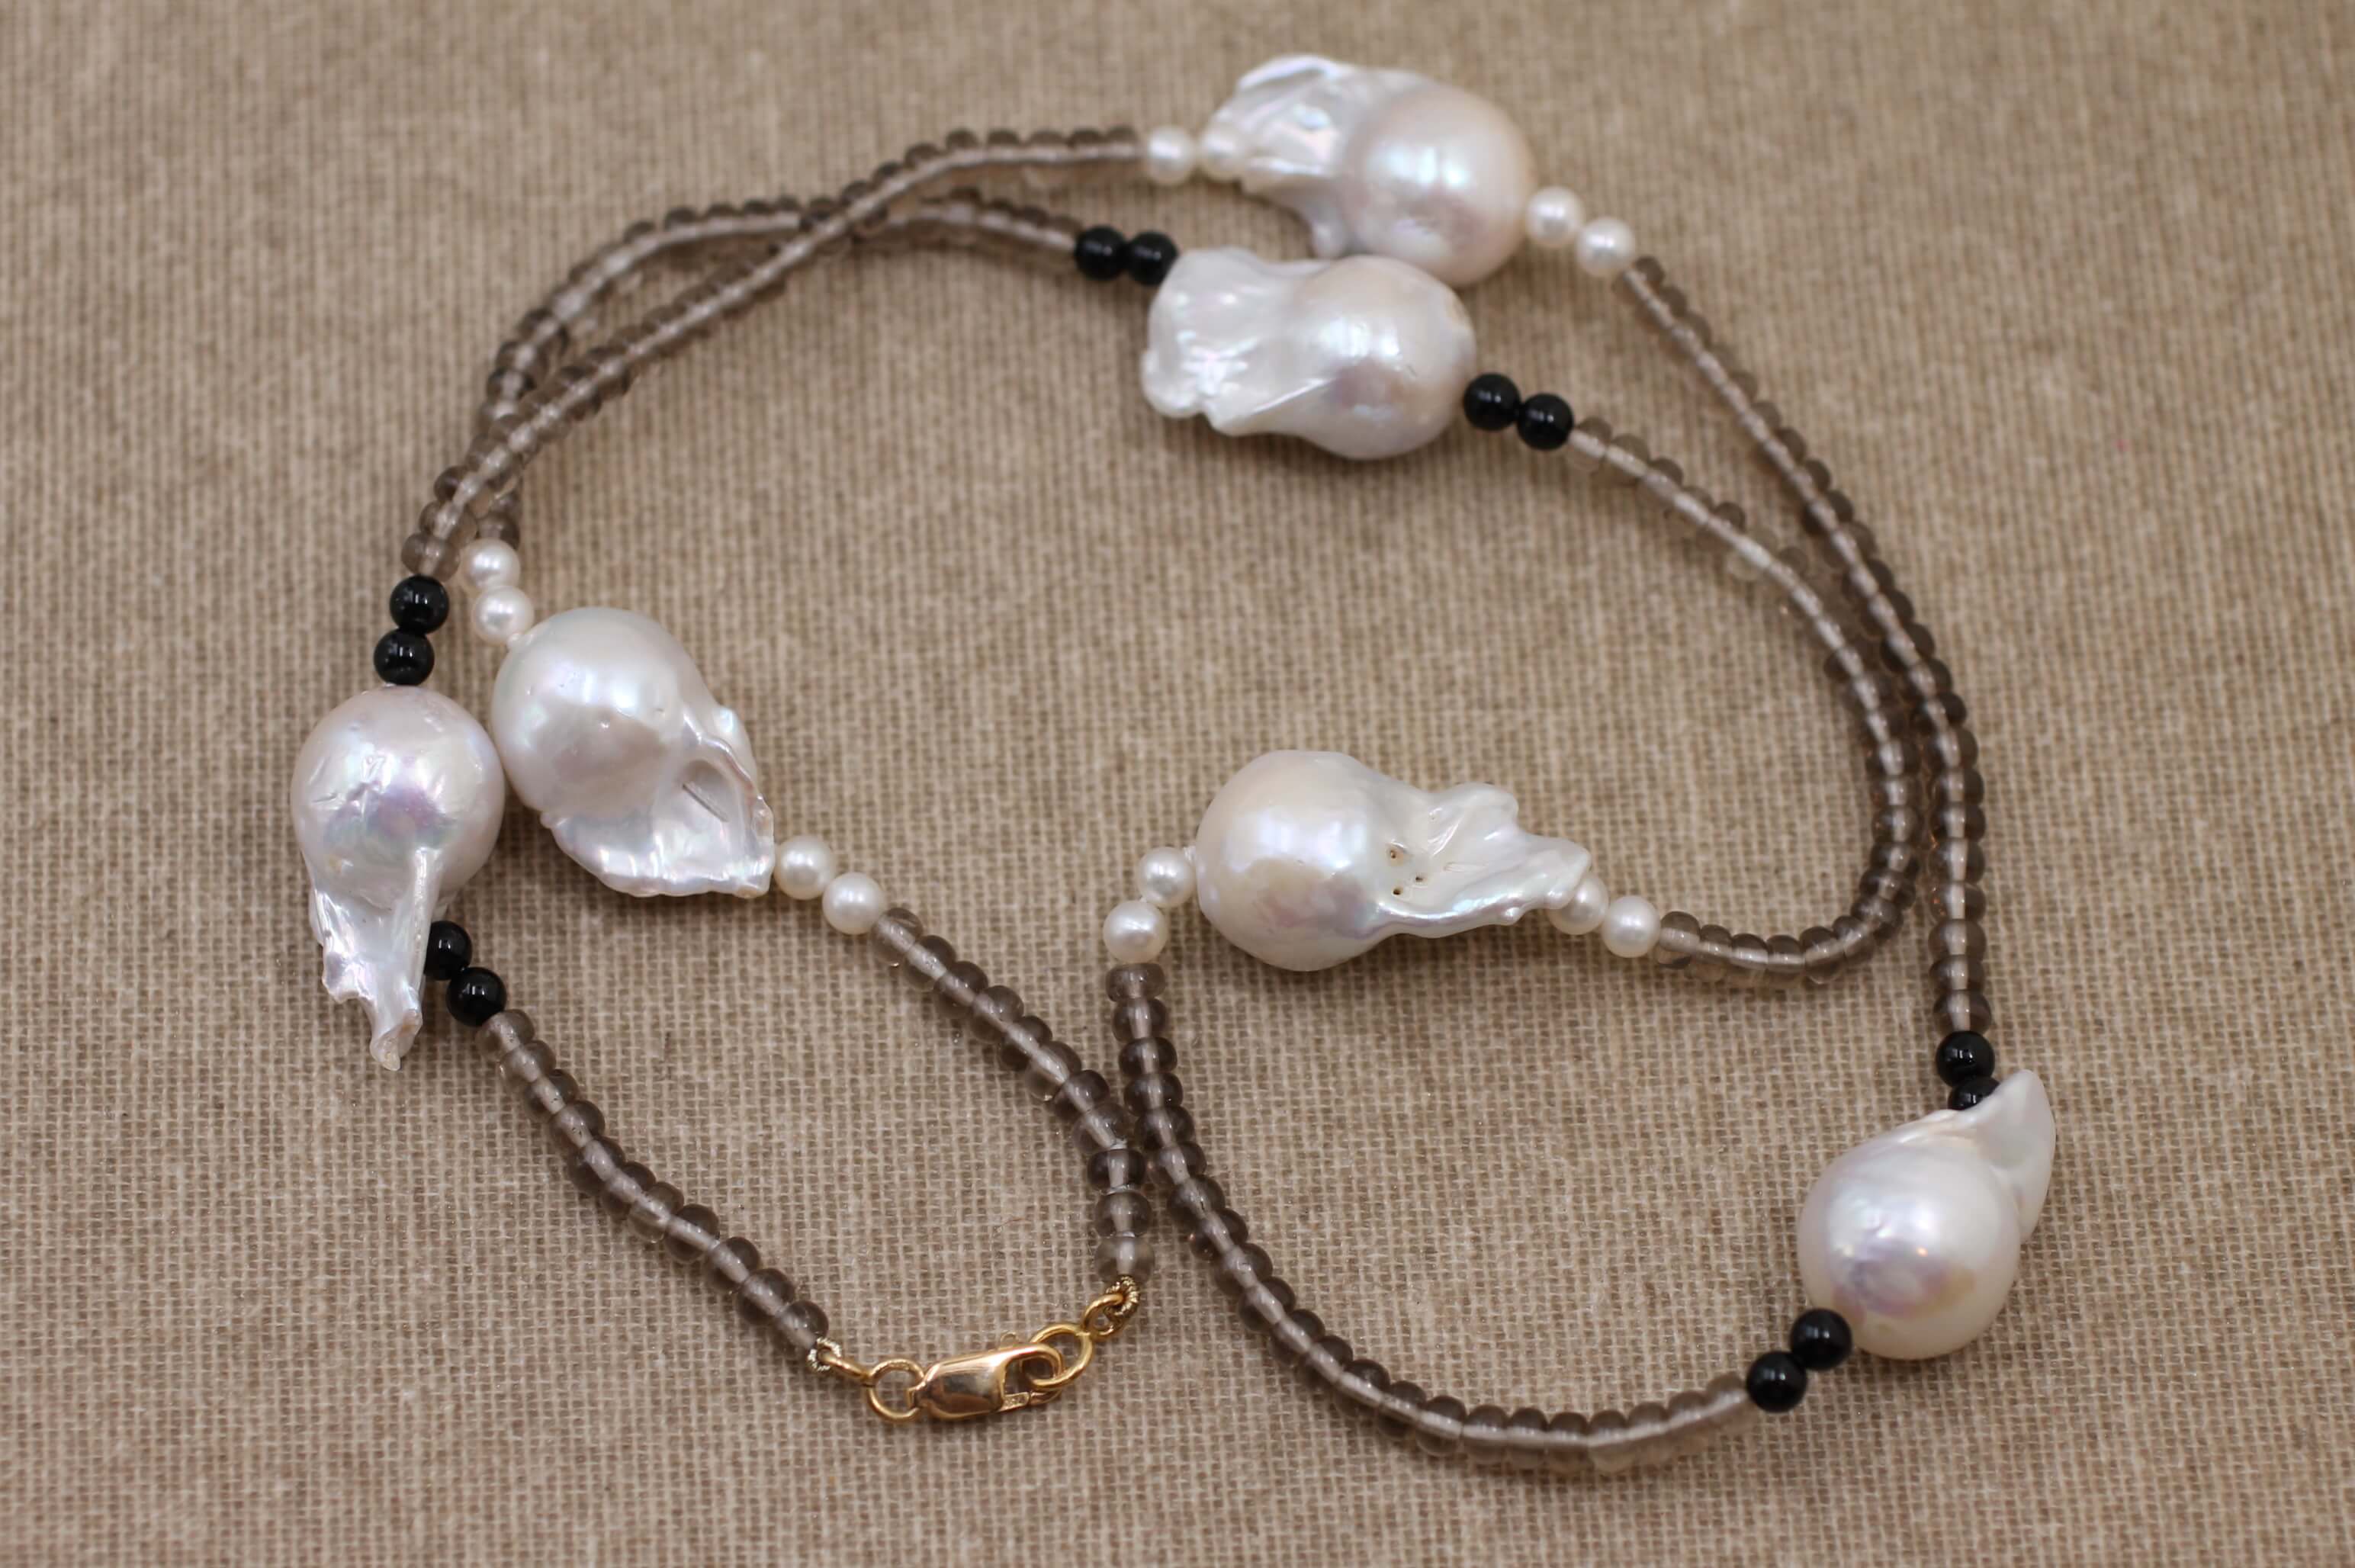 Gold, Smoky Quartz, Baroque Pearl, Onyx, Pearls necklace